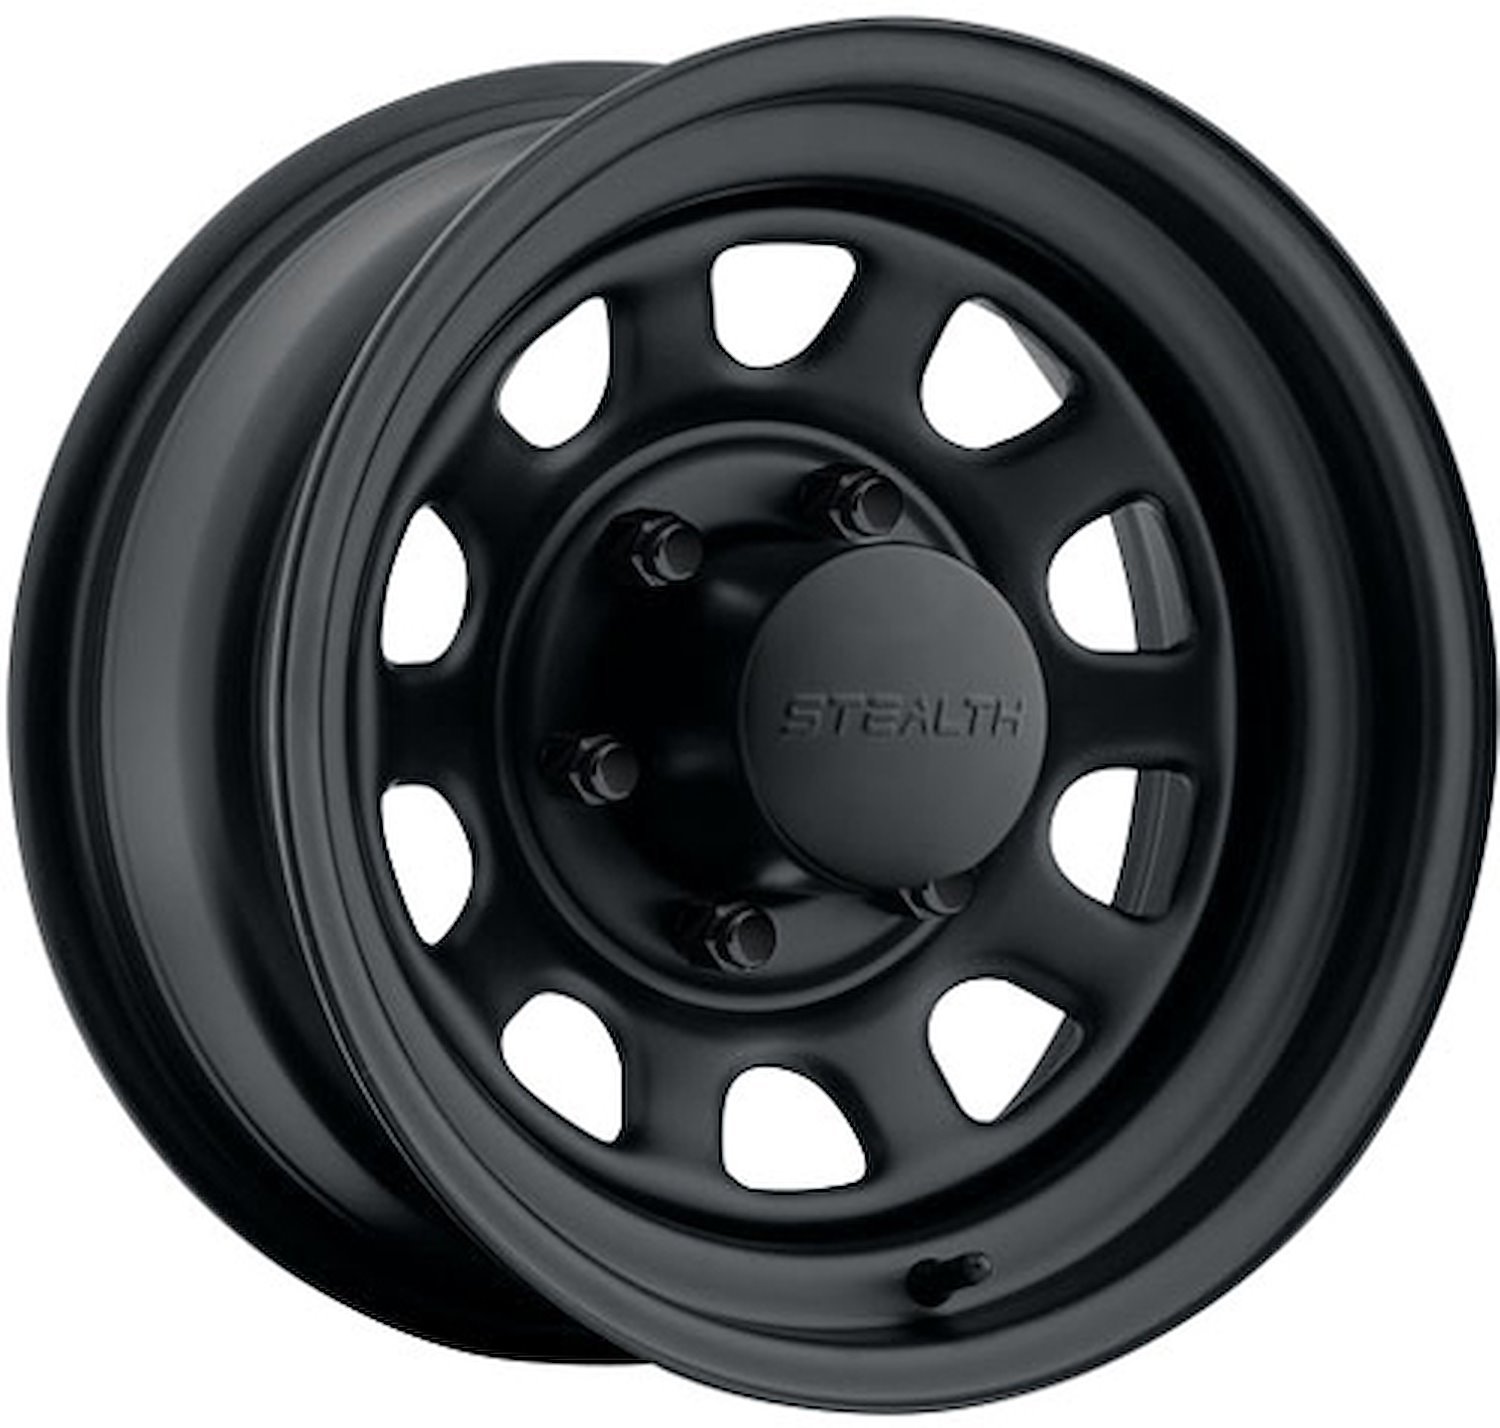 Stealth Black Daytona Wheel (Series 804) Size: 16" x 7"